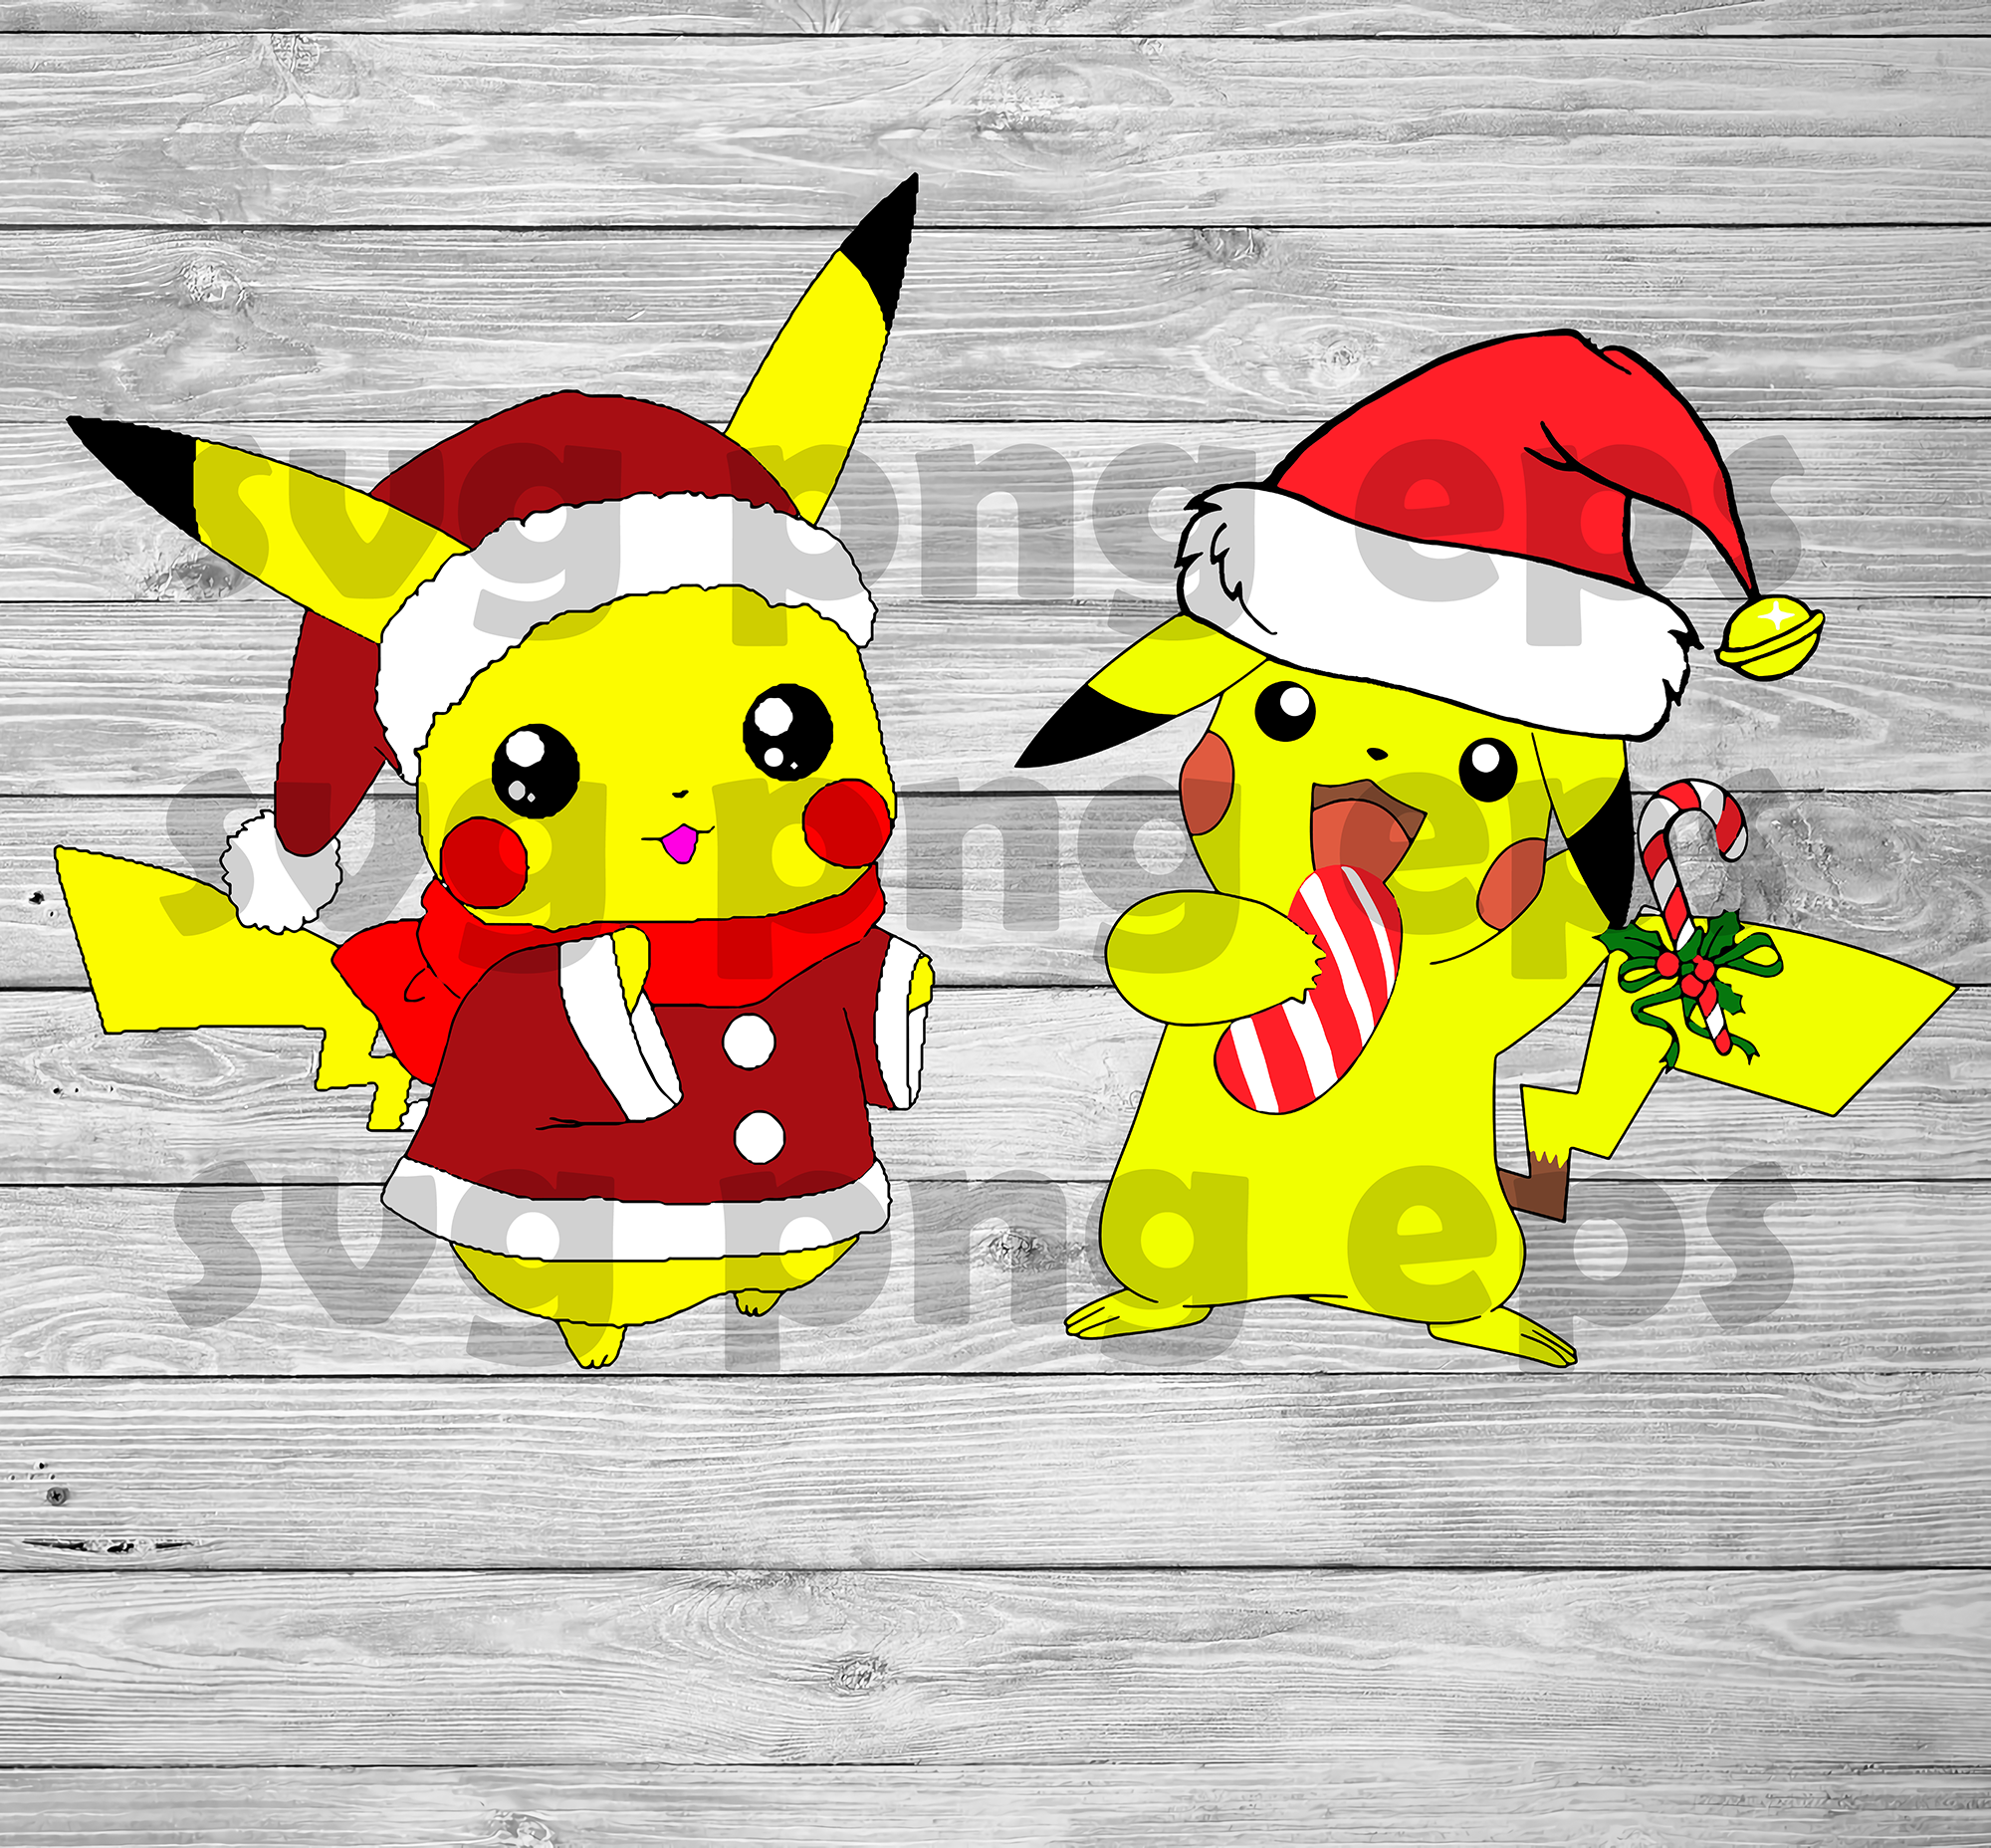 Download Pikachu Santa Svg Christmas Pikachu Santa Svg Pokemon Svg Pokemon Beetanosvg Scalable Vector Graphics SVG, PNG, EPS, DXF File